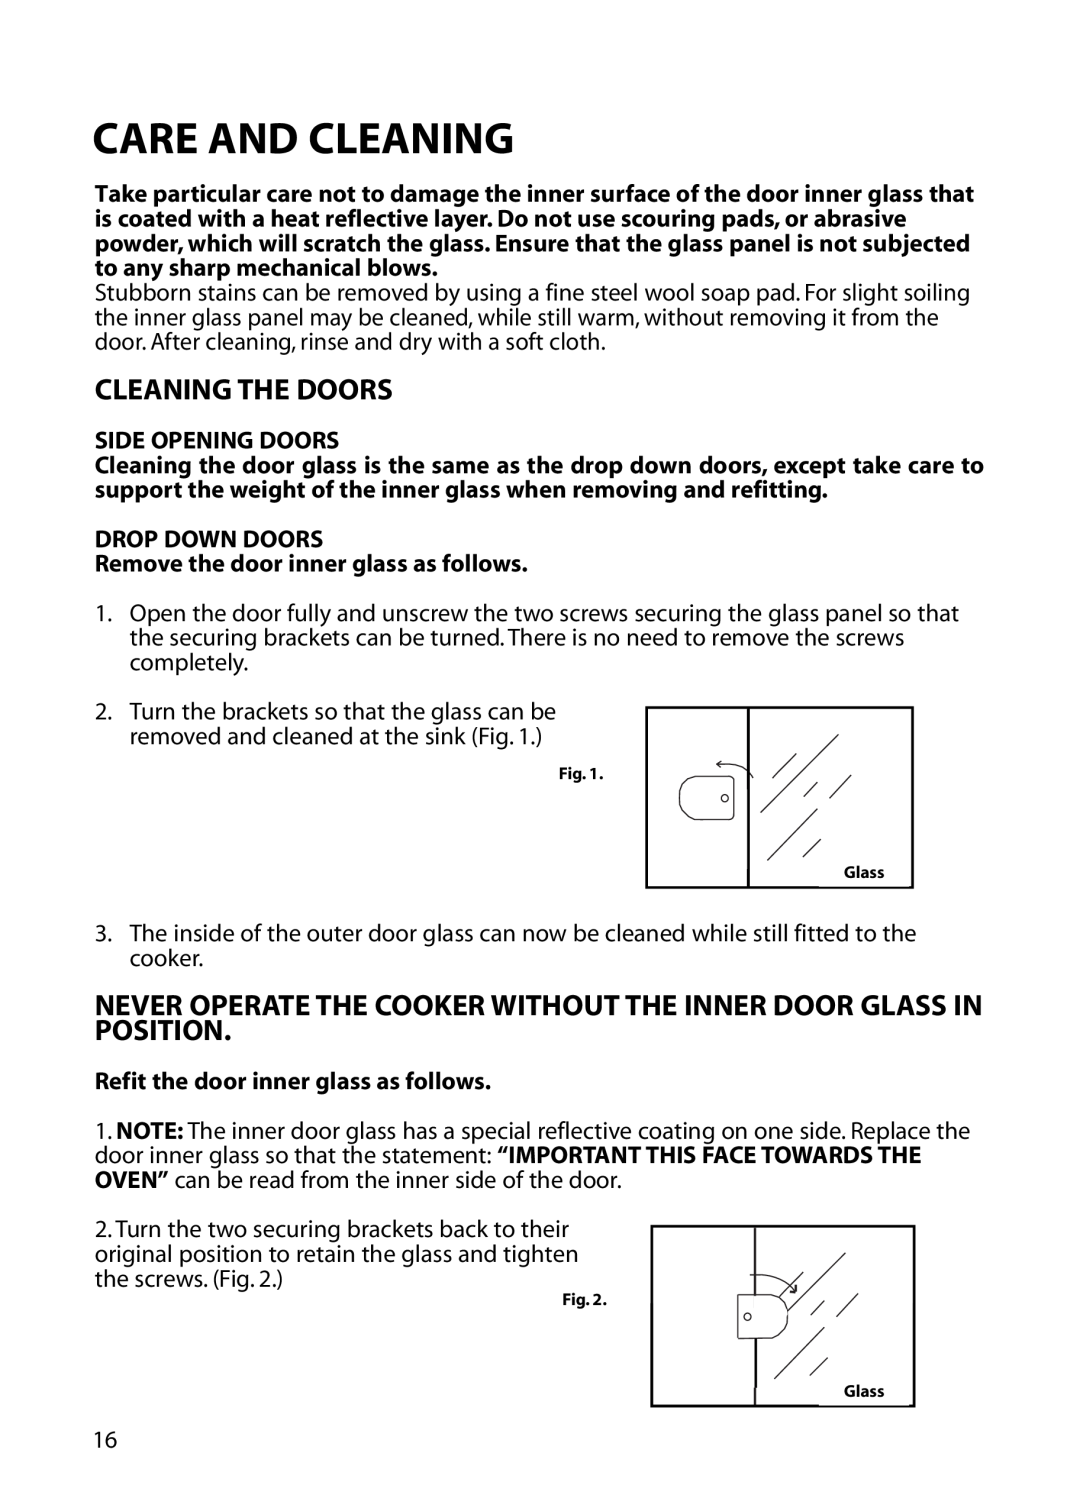 Hotpoint EG52 Cleaning The Doors, Side Opening Doors, Drop Down Doors, Remove the door inner glass as follows 